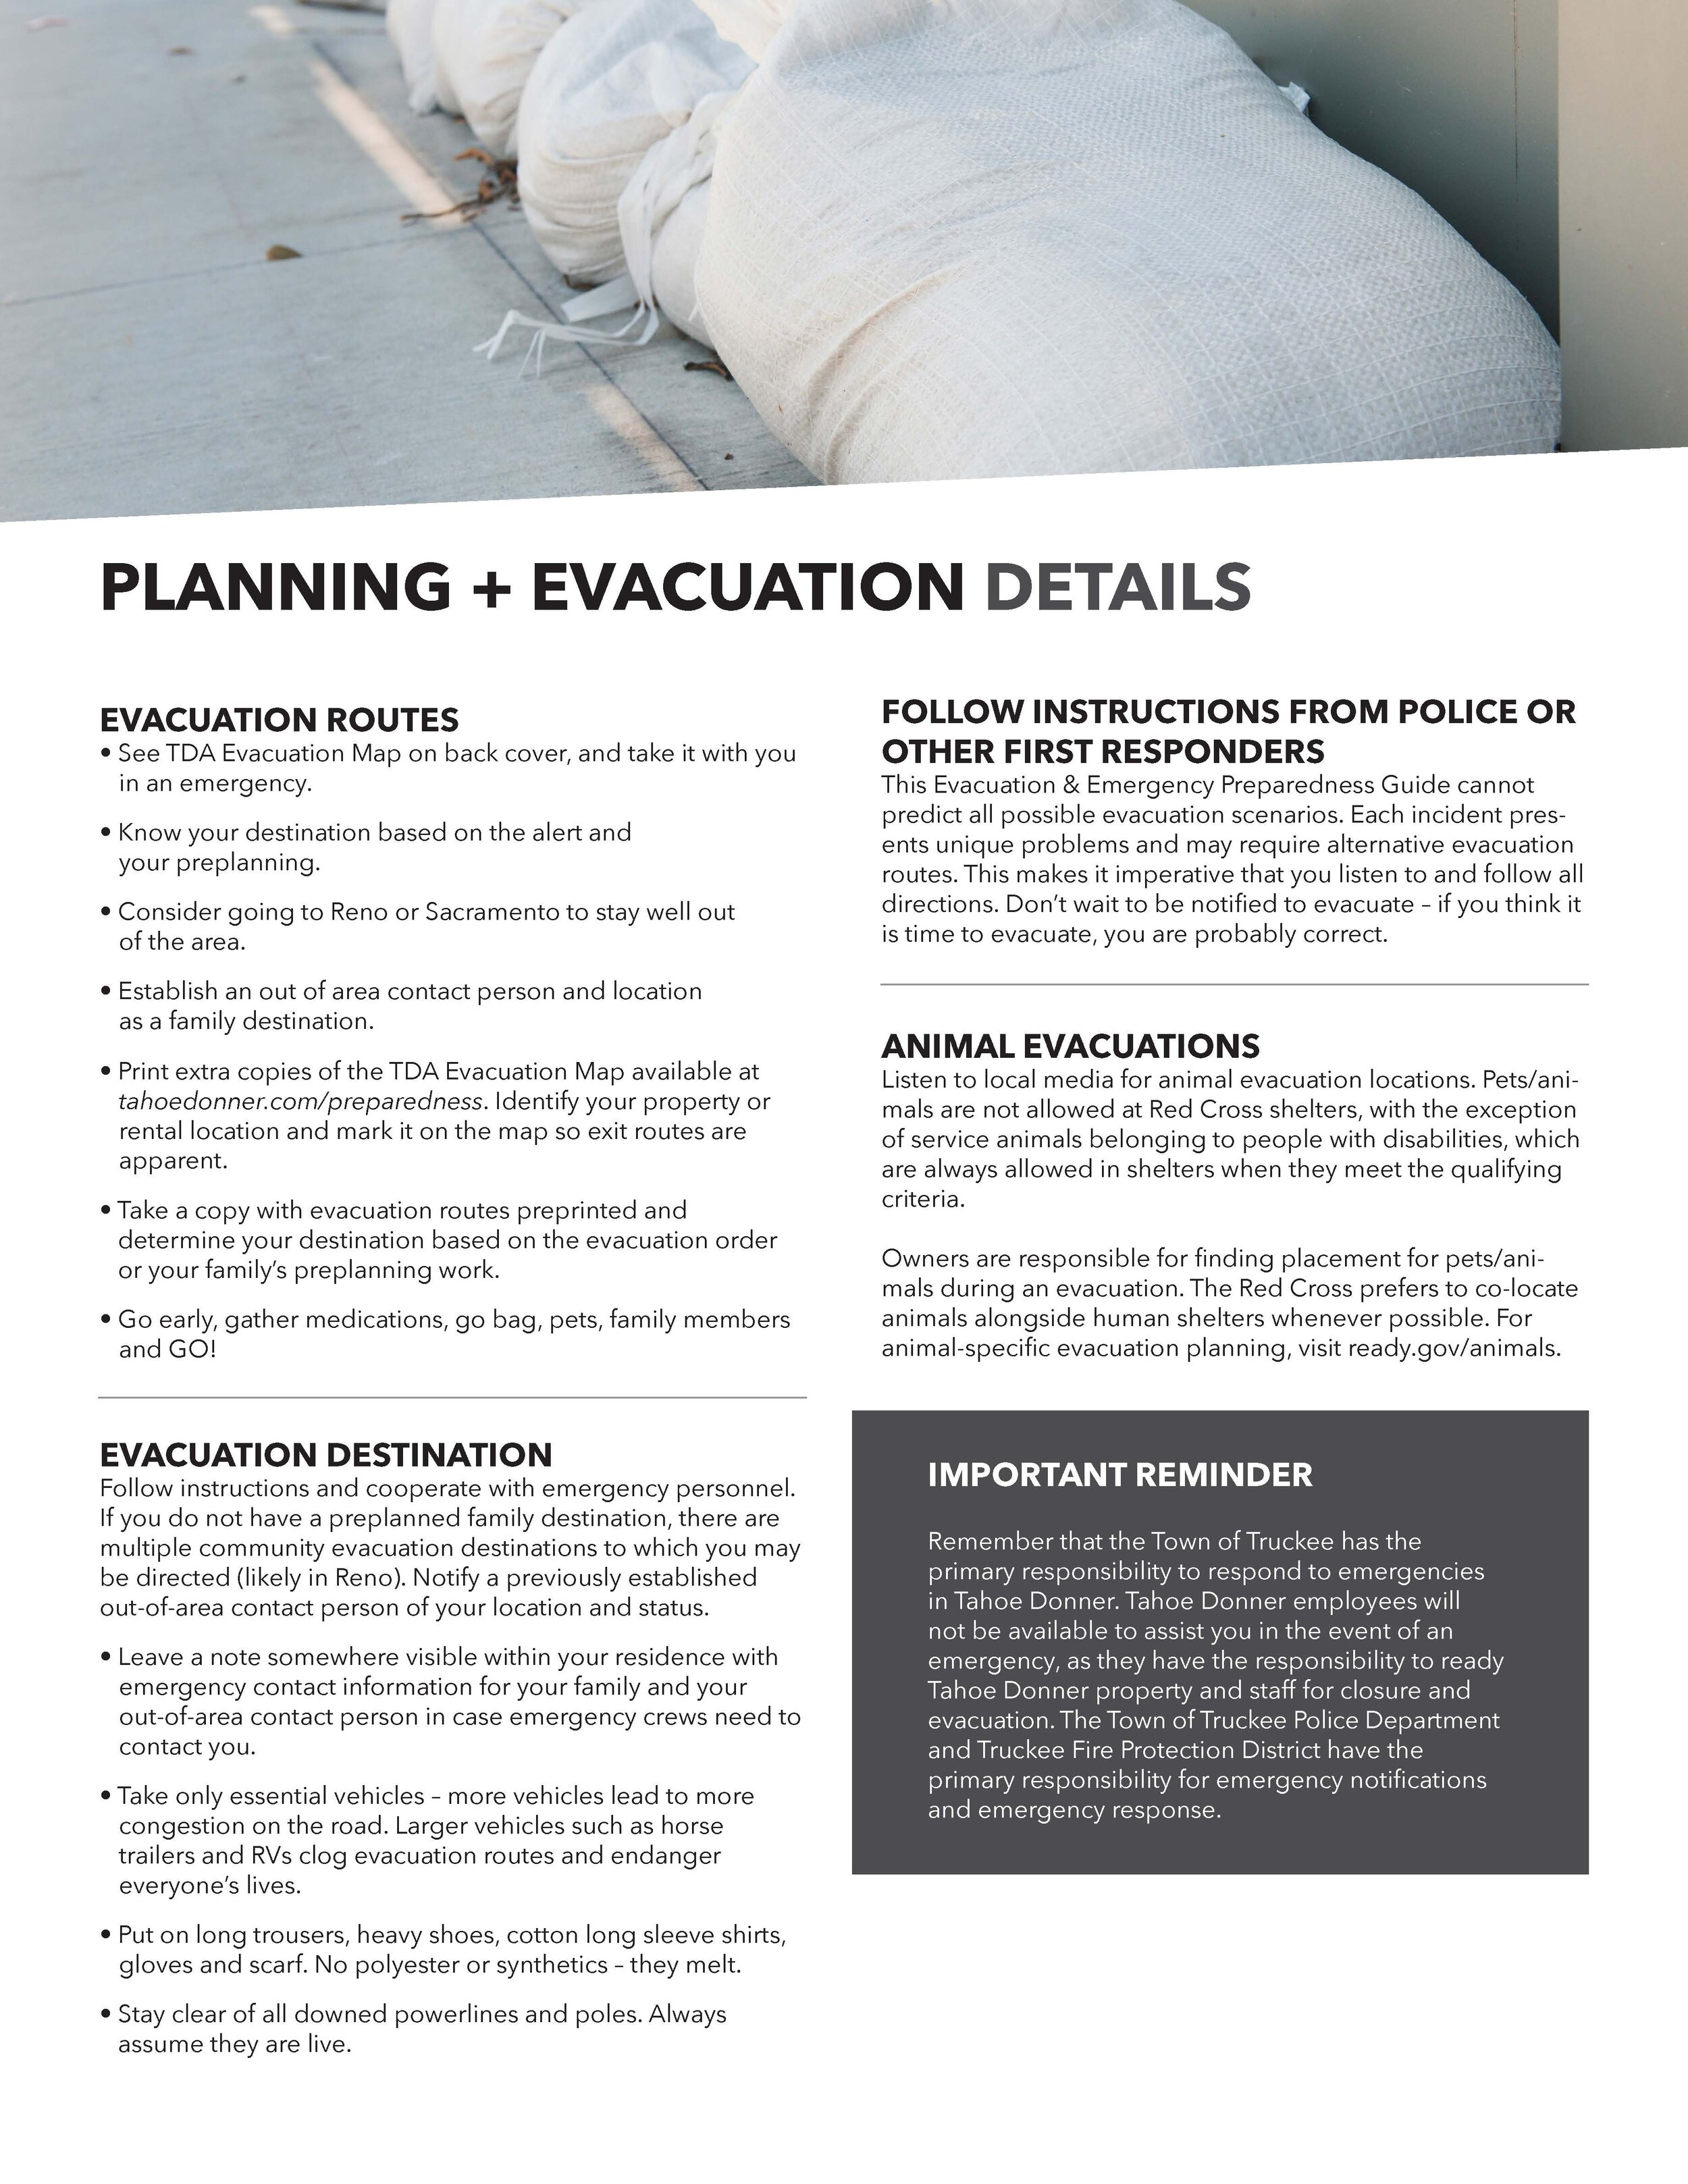 Evacuation-Guide-v3_Page_4.jpg